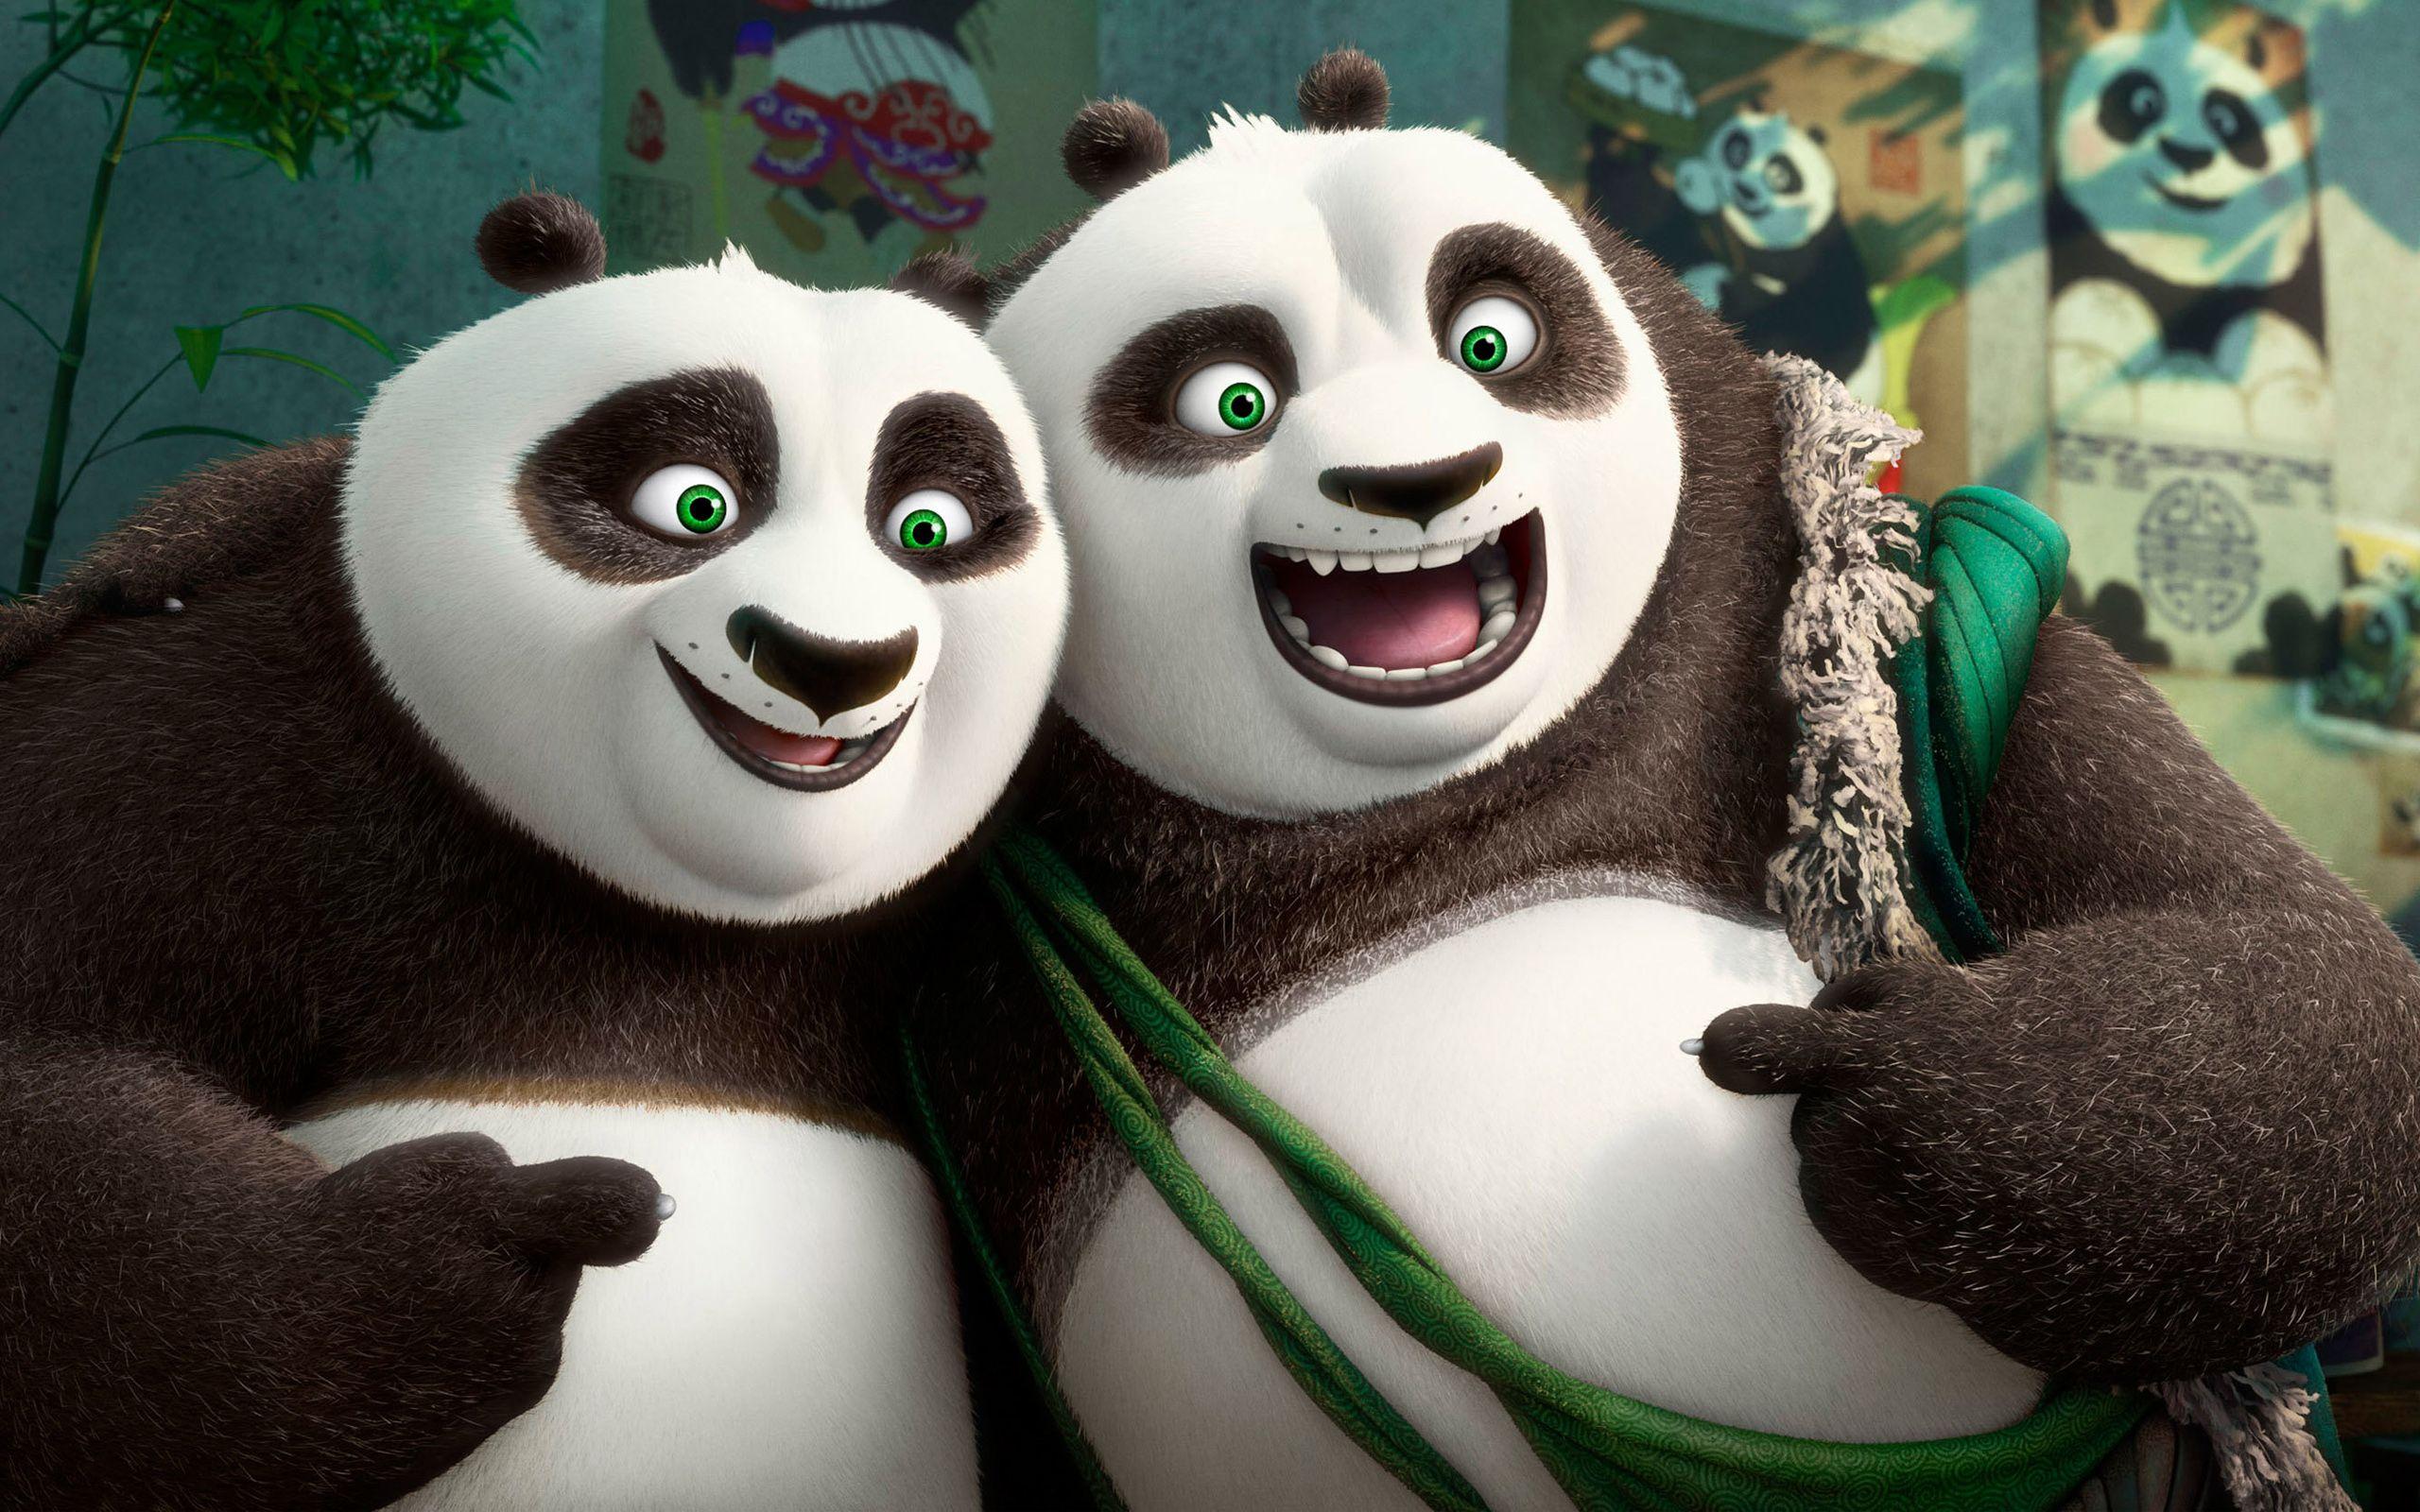 Kung Fu Panda 3 HD Wallpaper and Background Image